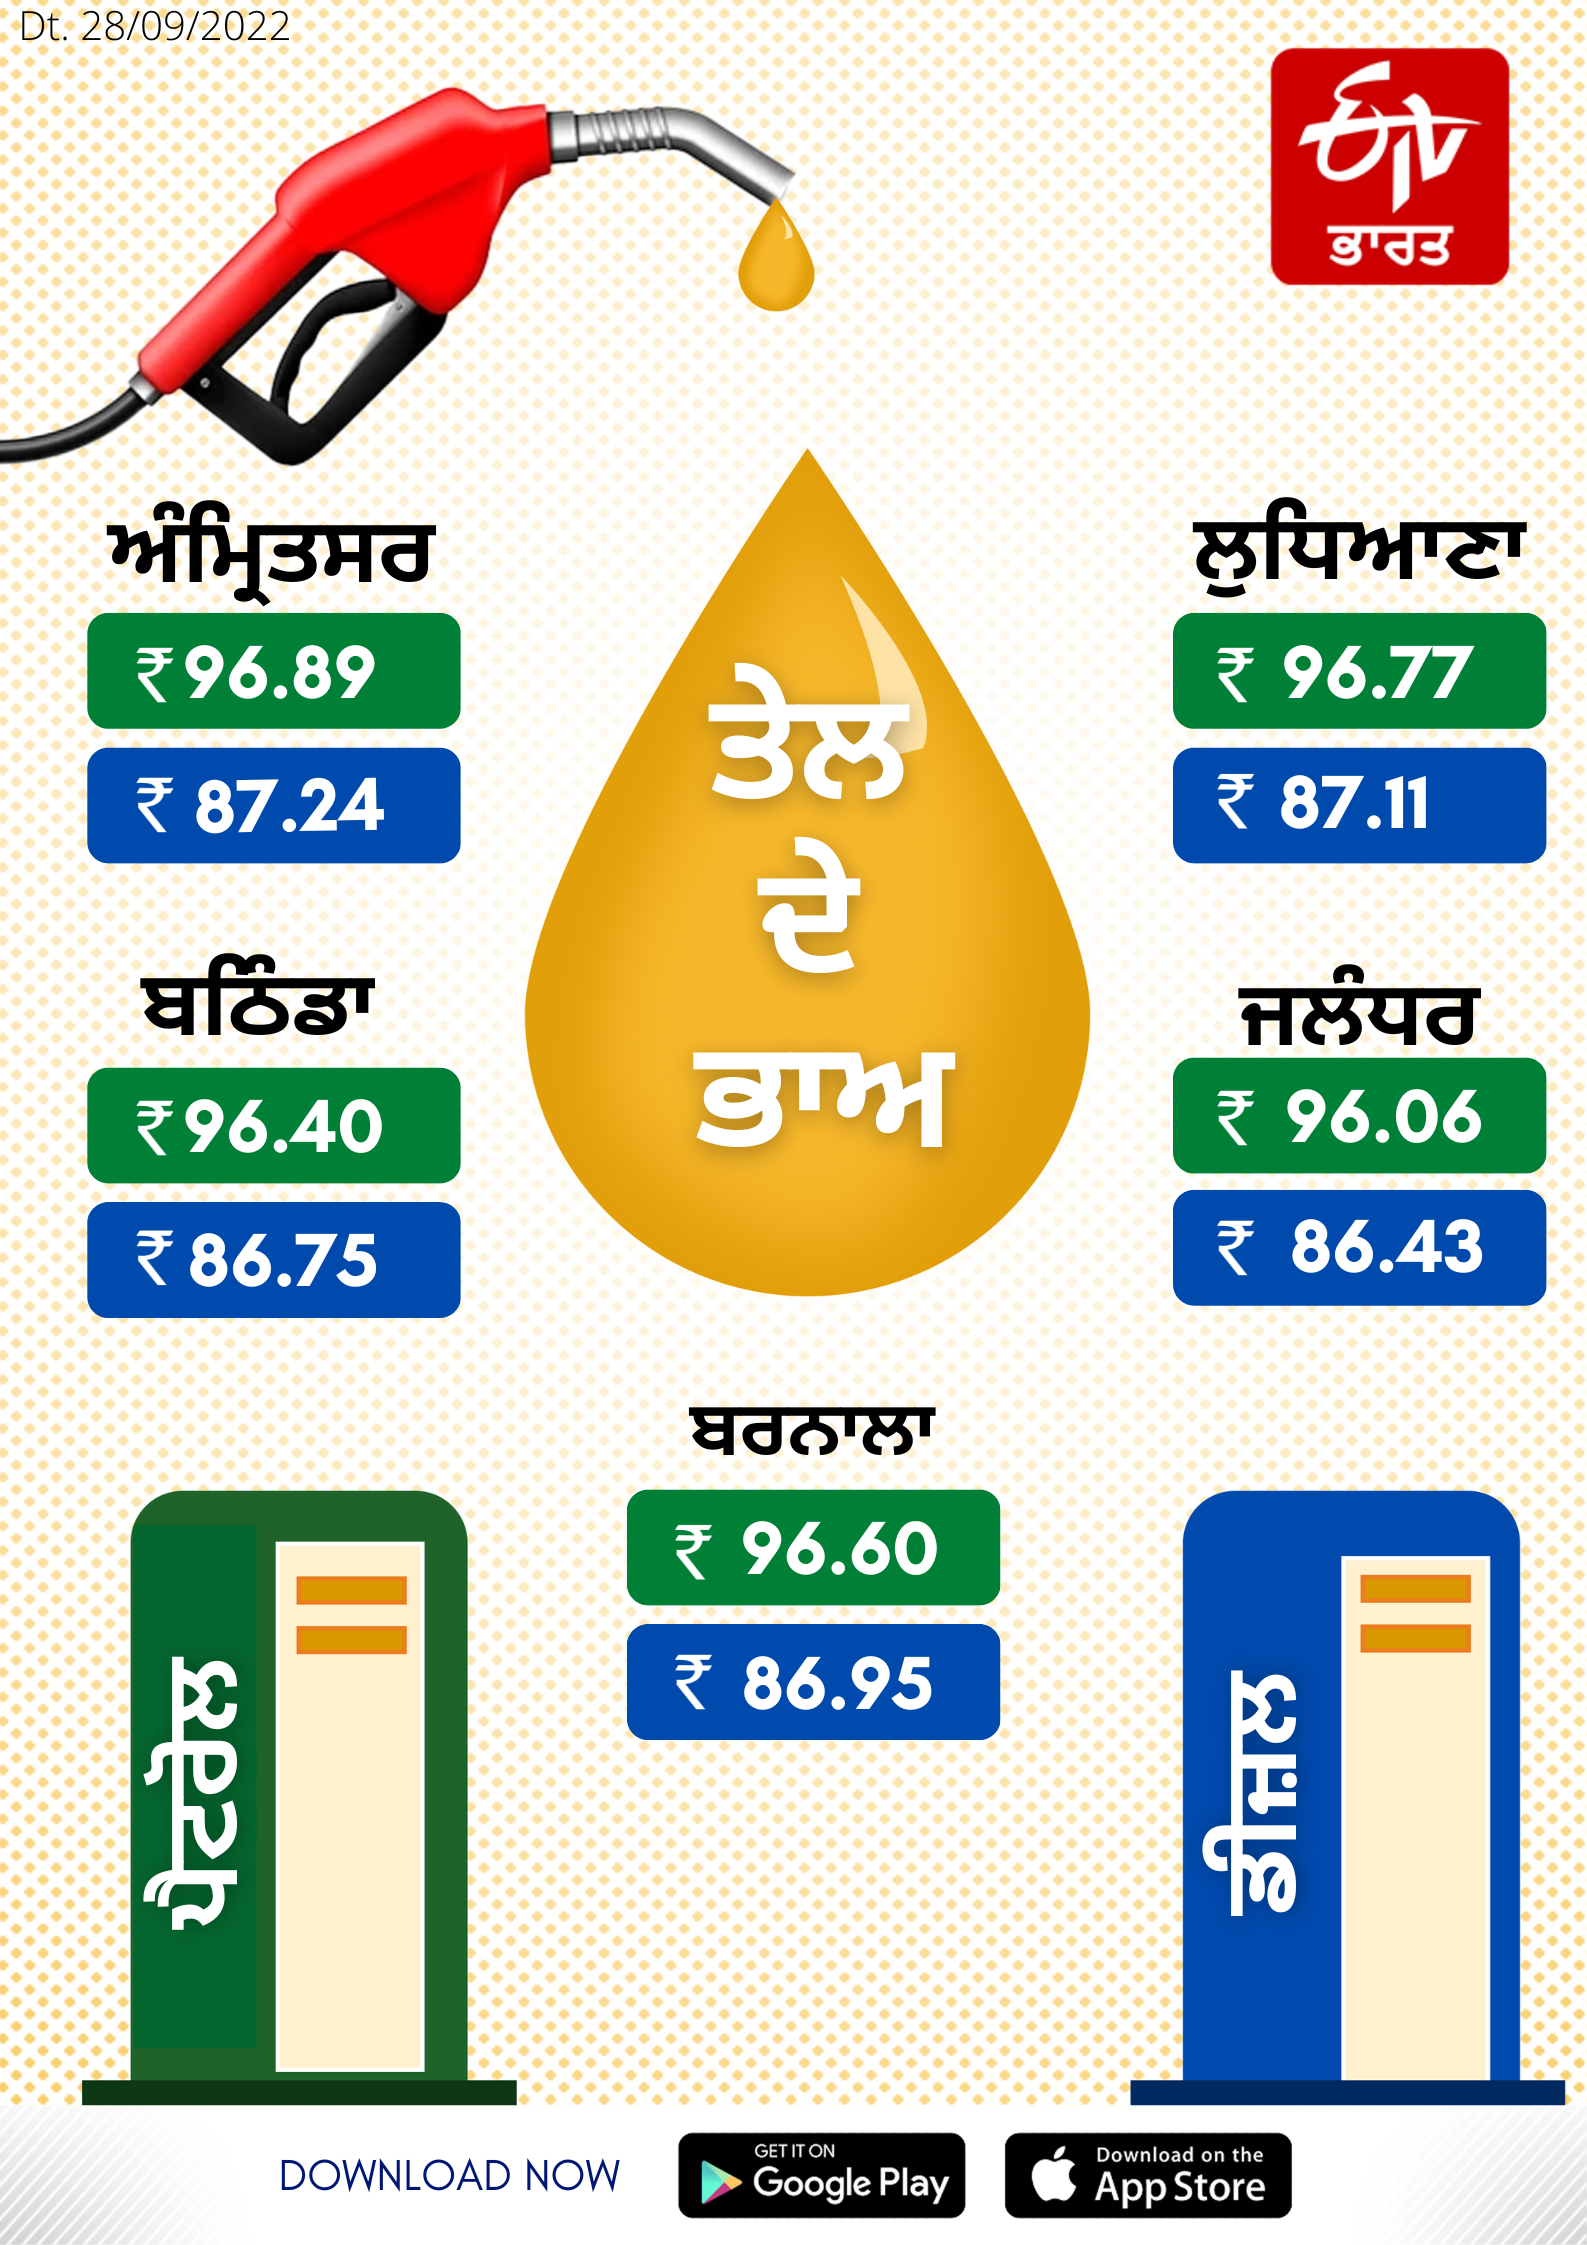 Petrol and diesel rates